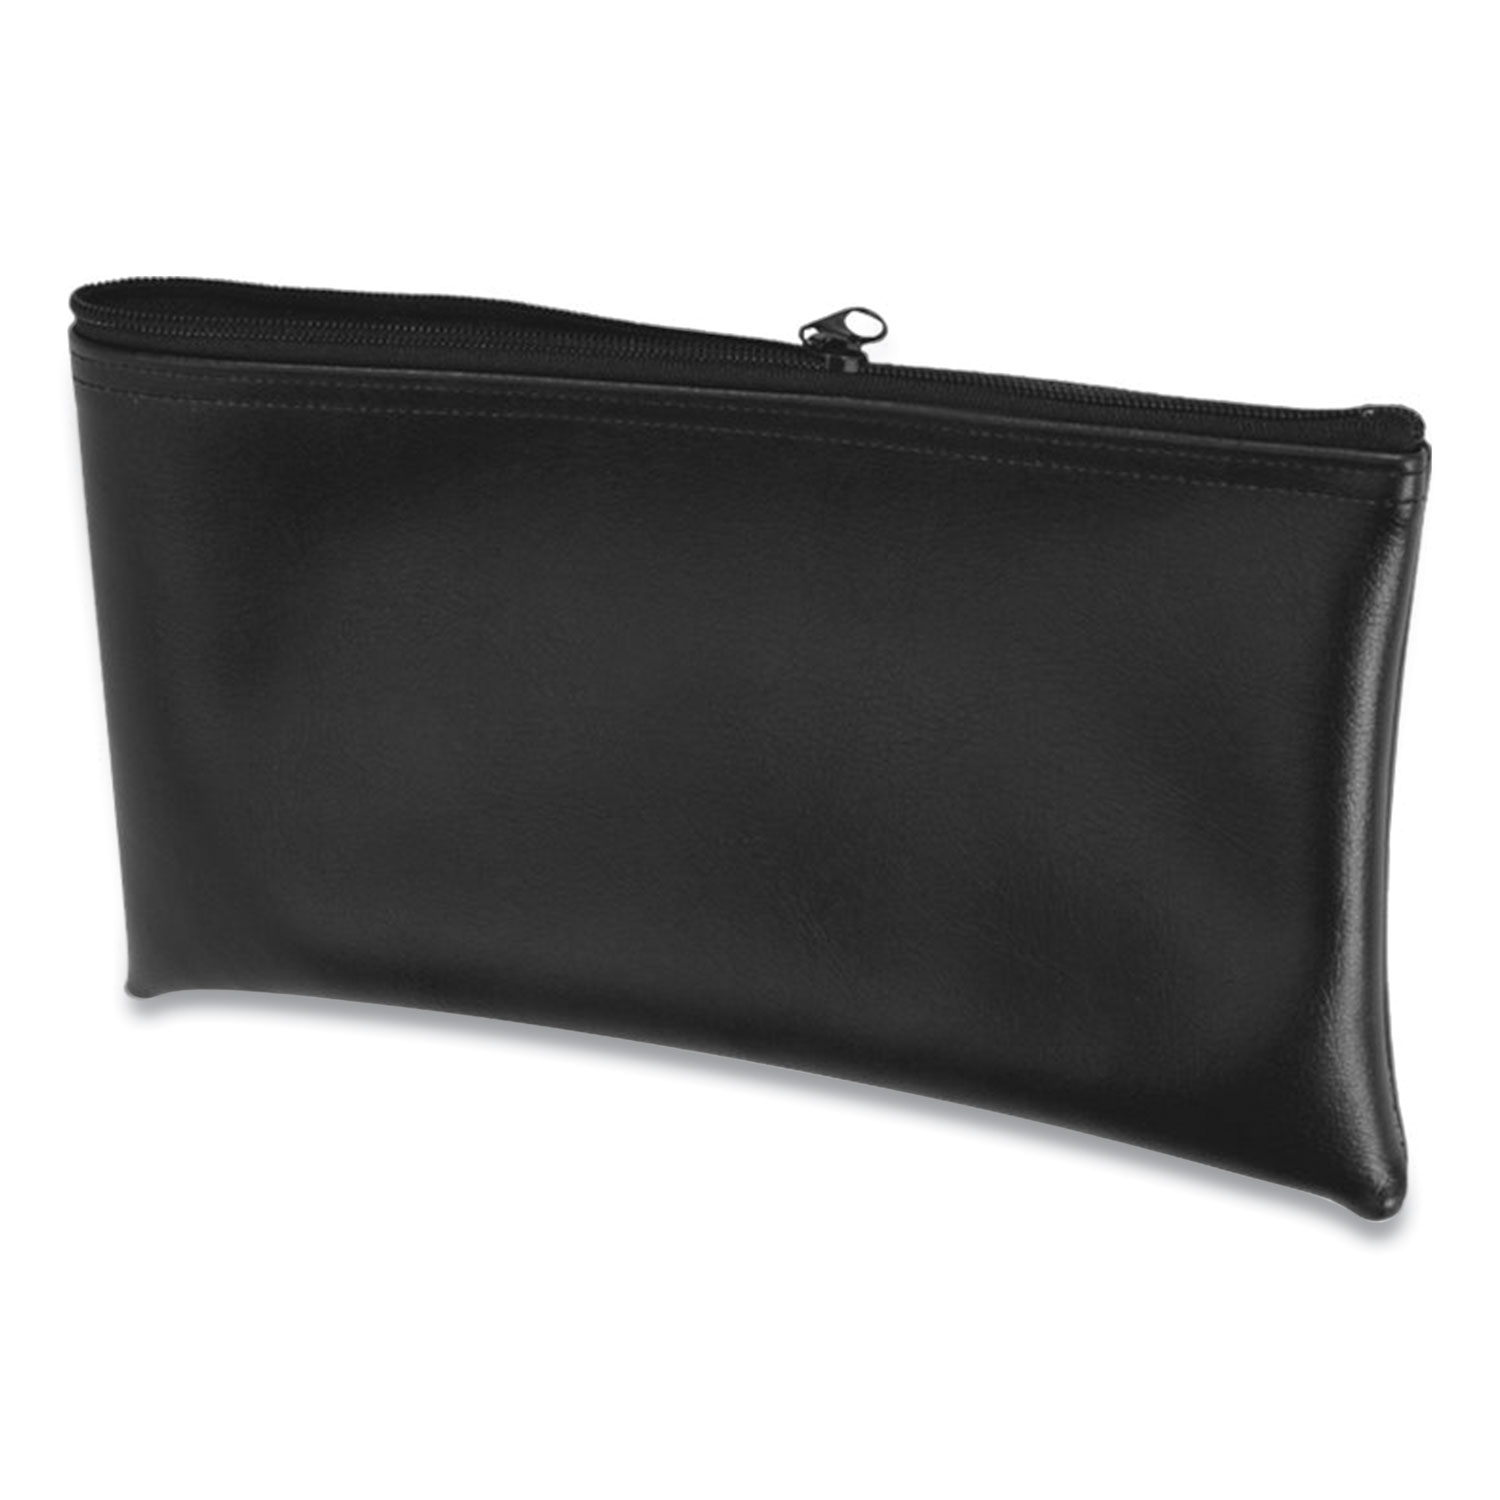  CONTROLTEK 530976 Multipurpose Zipper Bags, 11 x 6, Vinyl, Black (CNK24421422) 